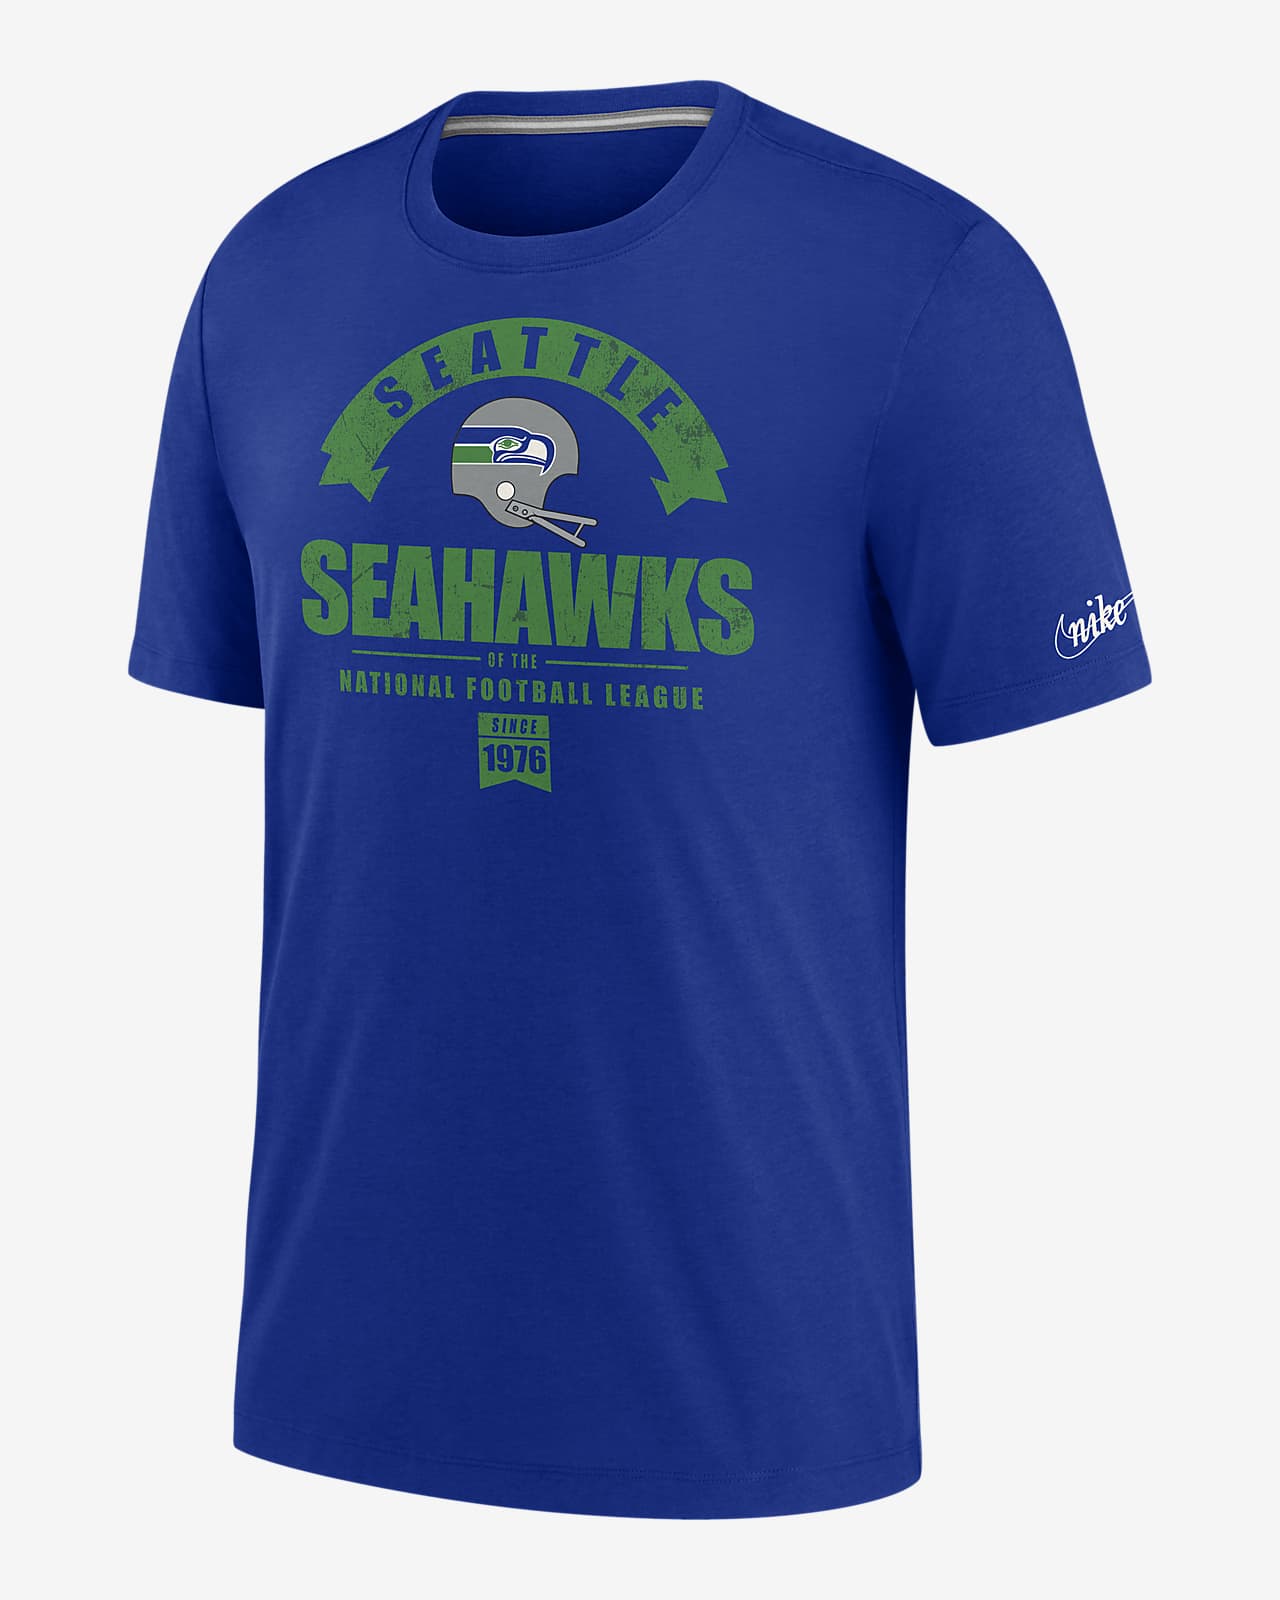 Tee-shirt Tri-blend Nike Historic (NFL Seahawks) pour Homme